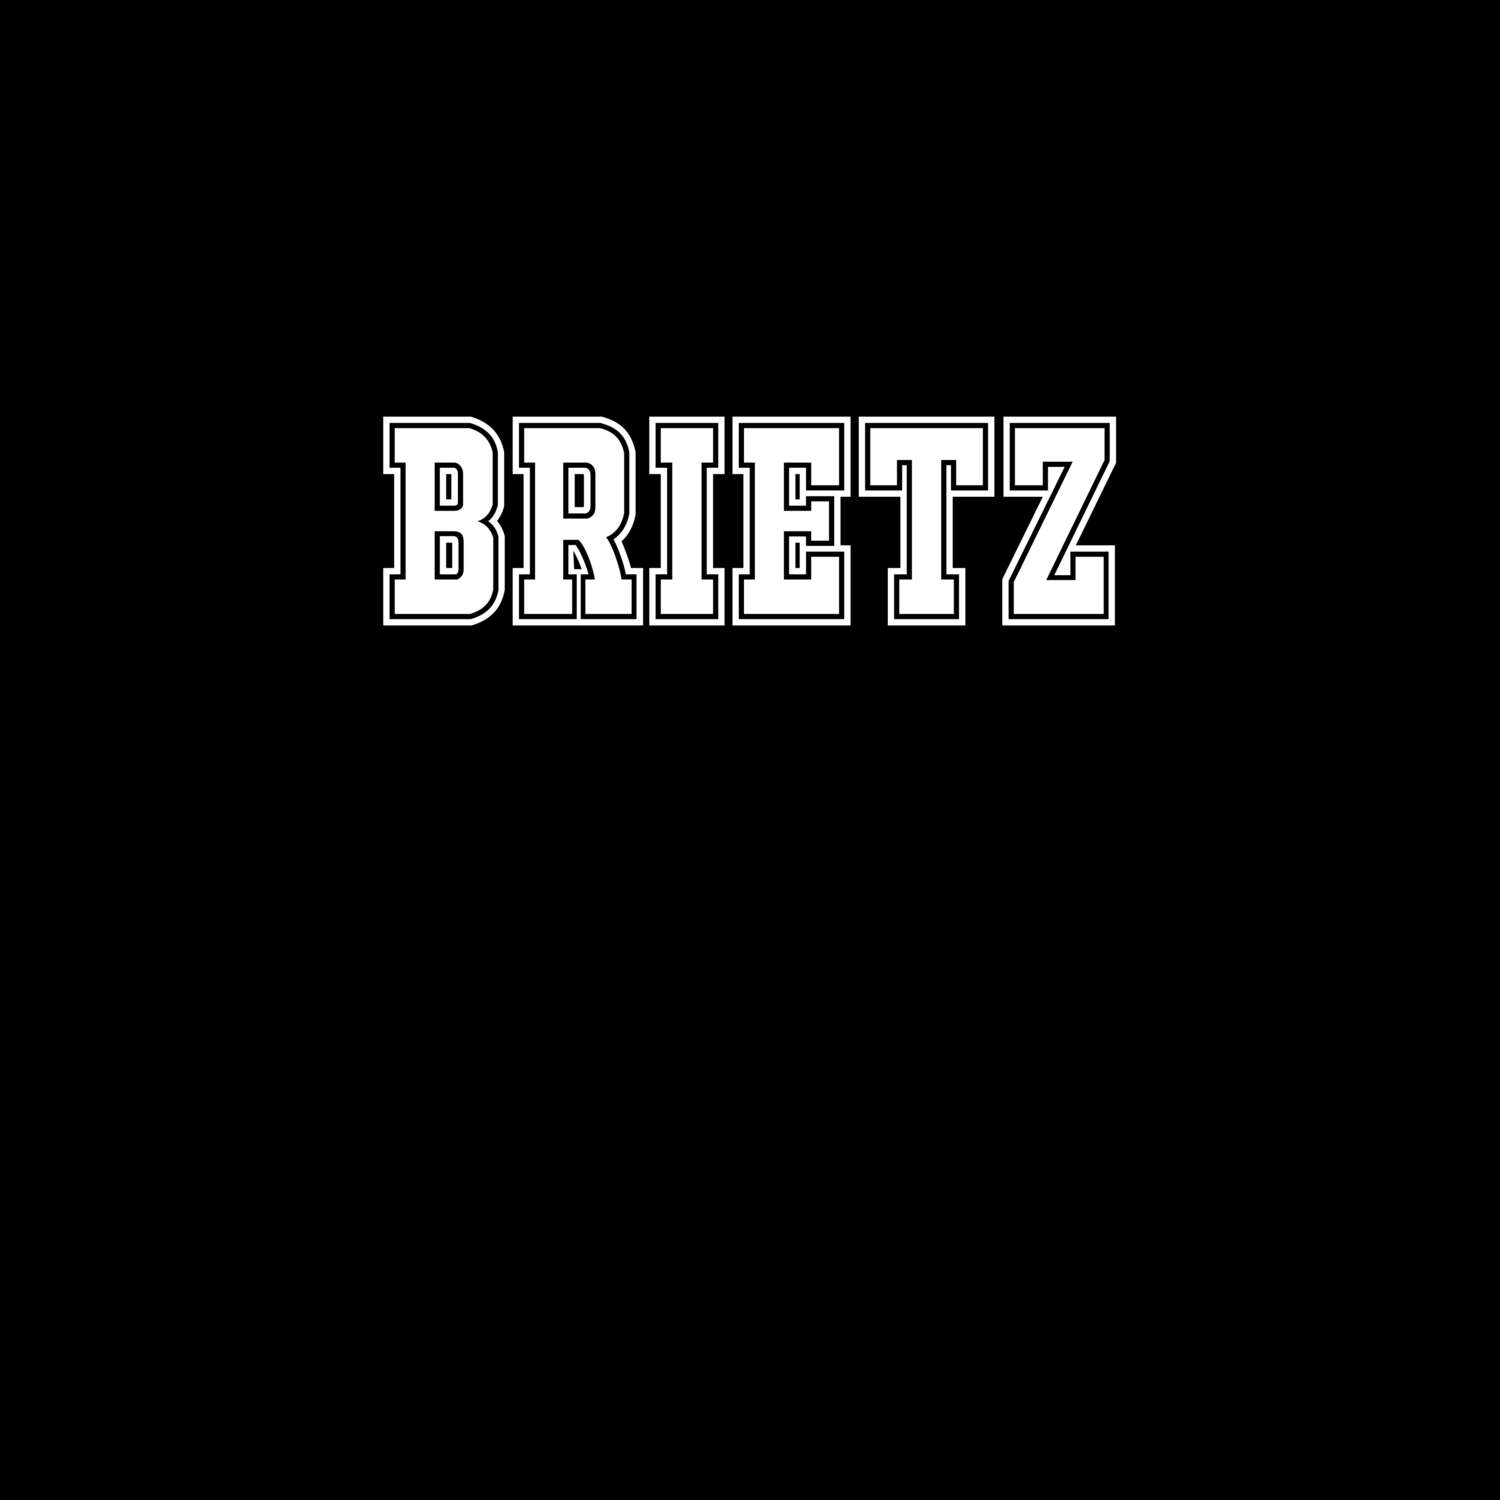 Brietz T-Shirt »Classic«